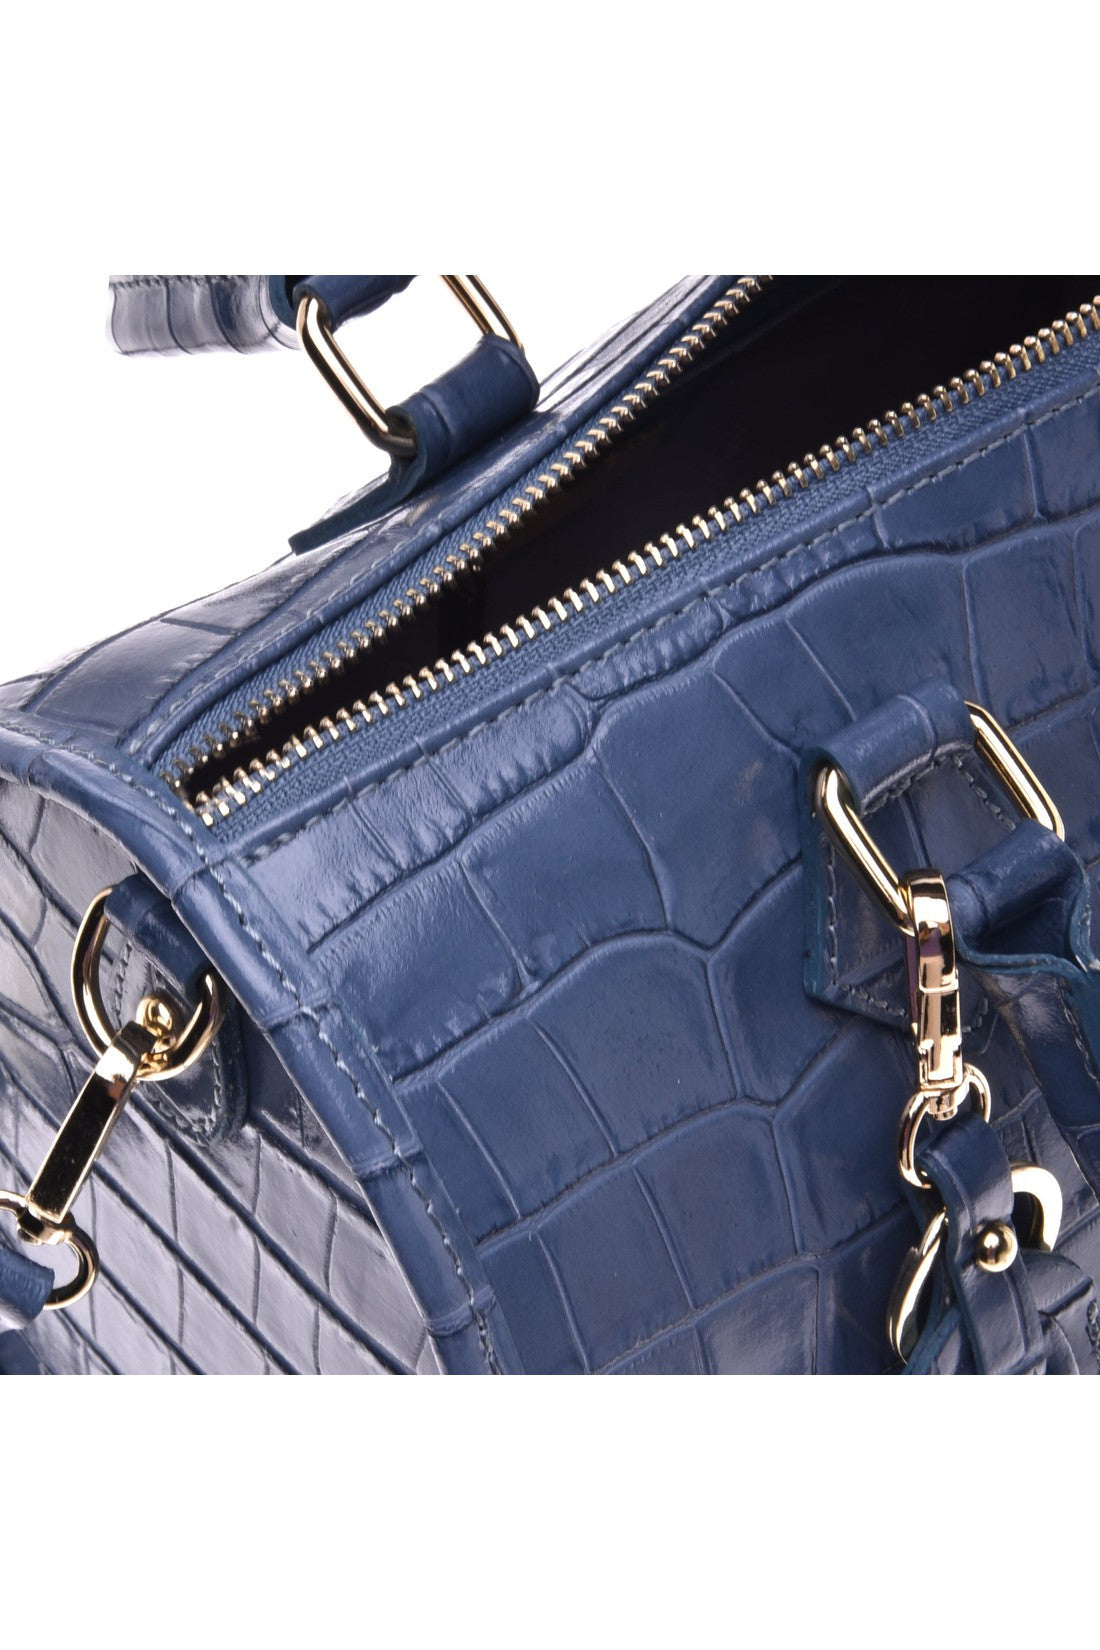 Light blue printed leather handbag